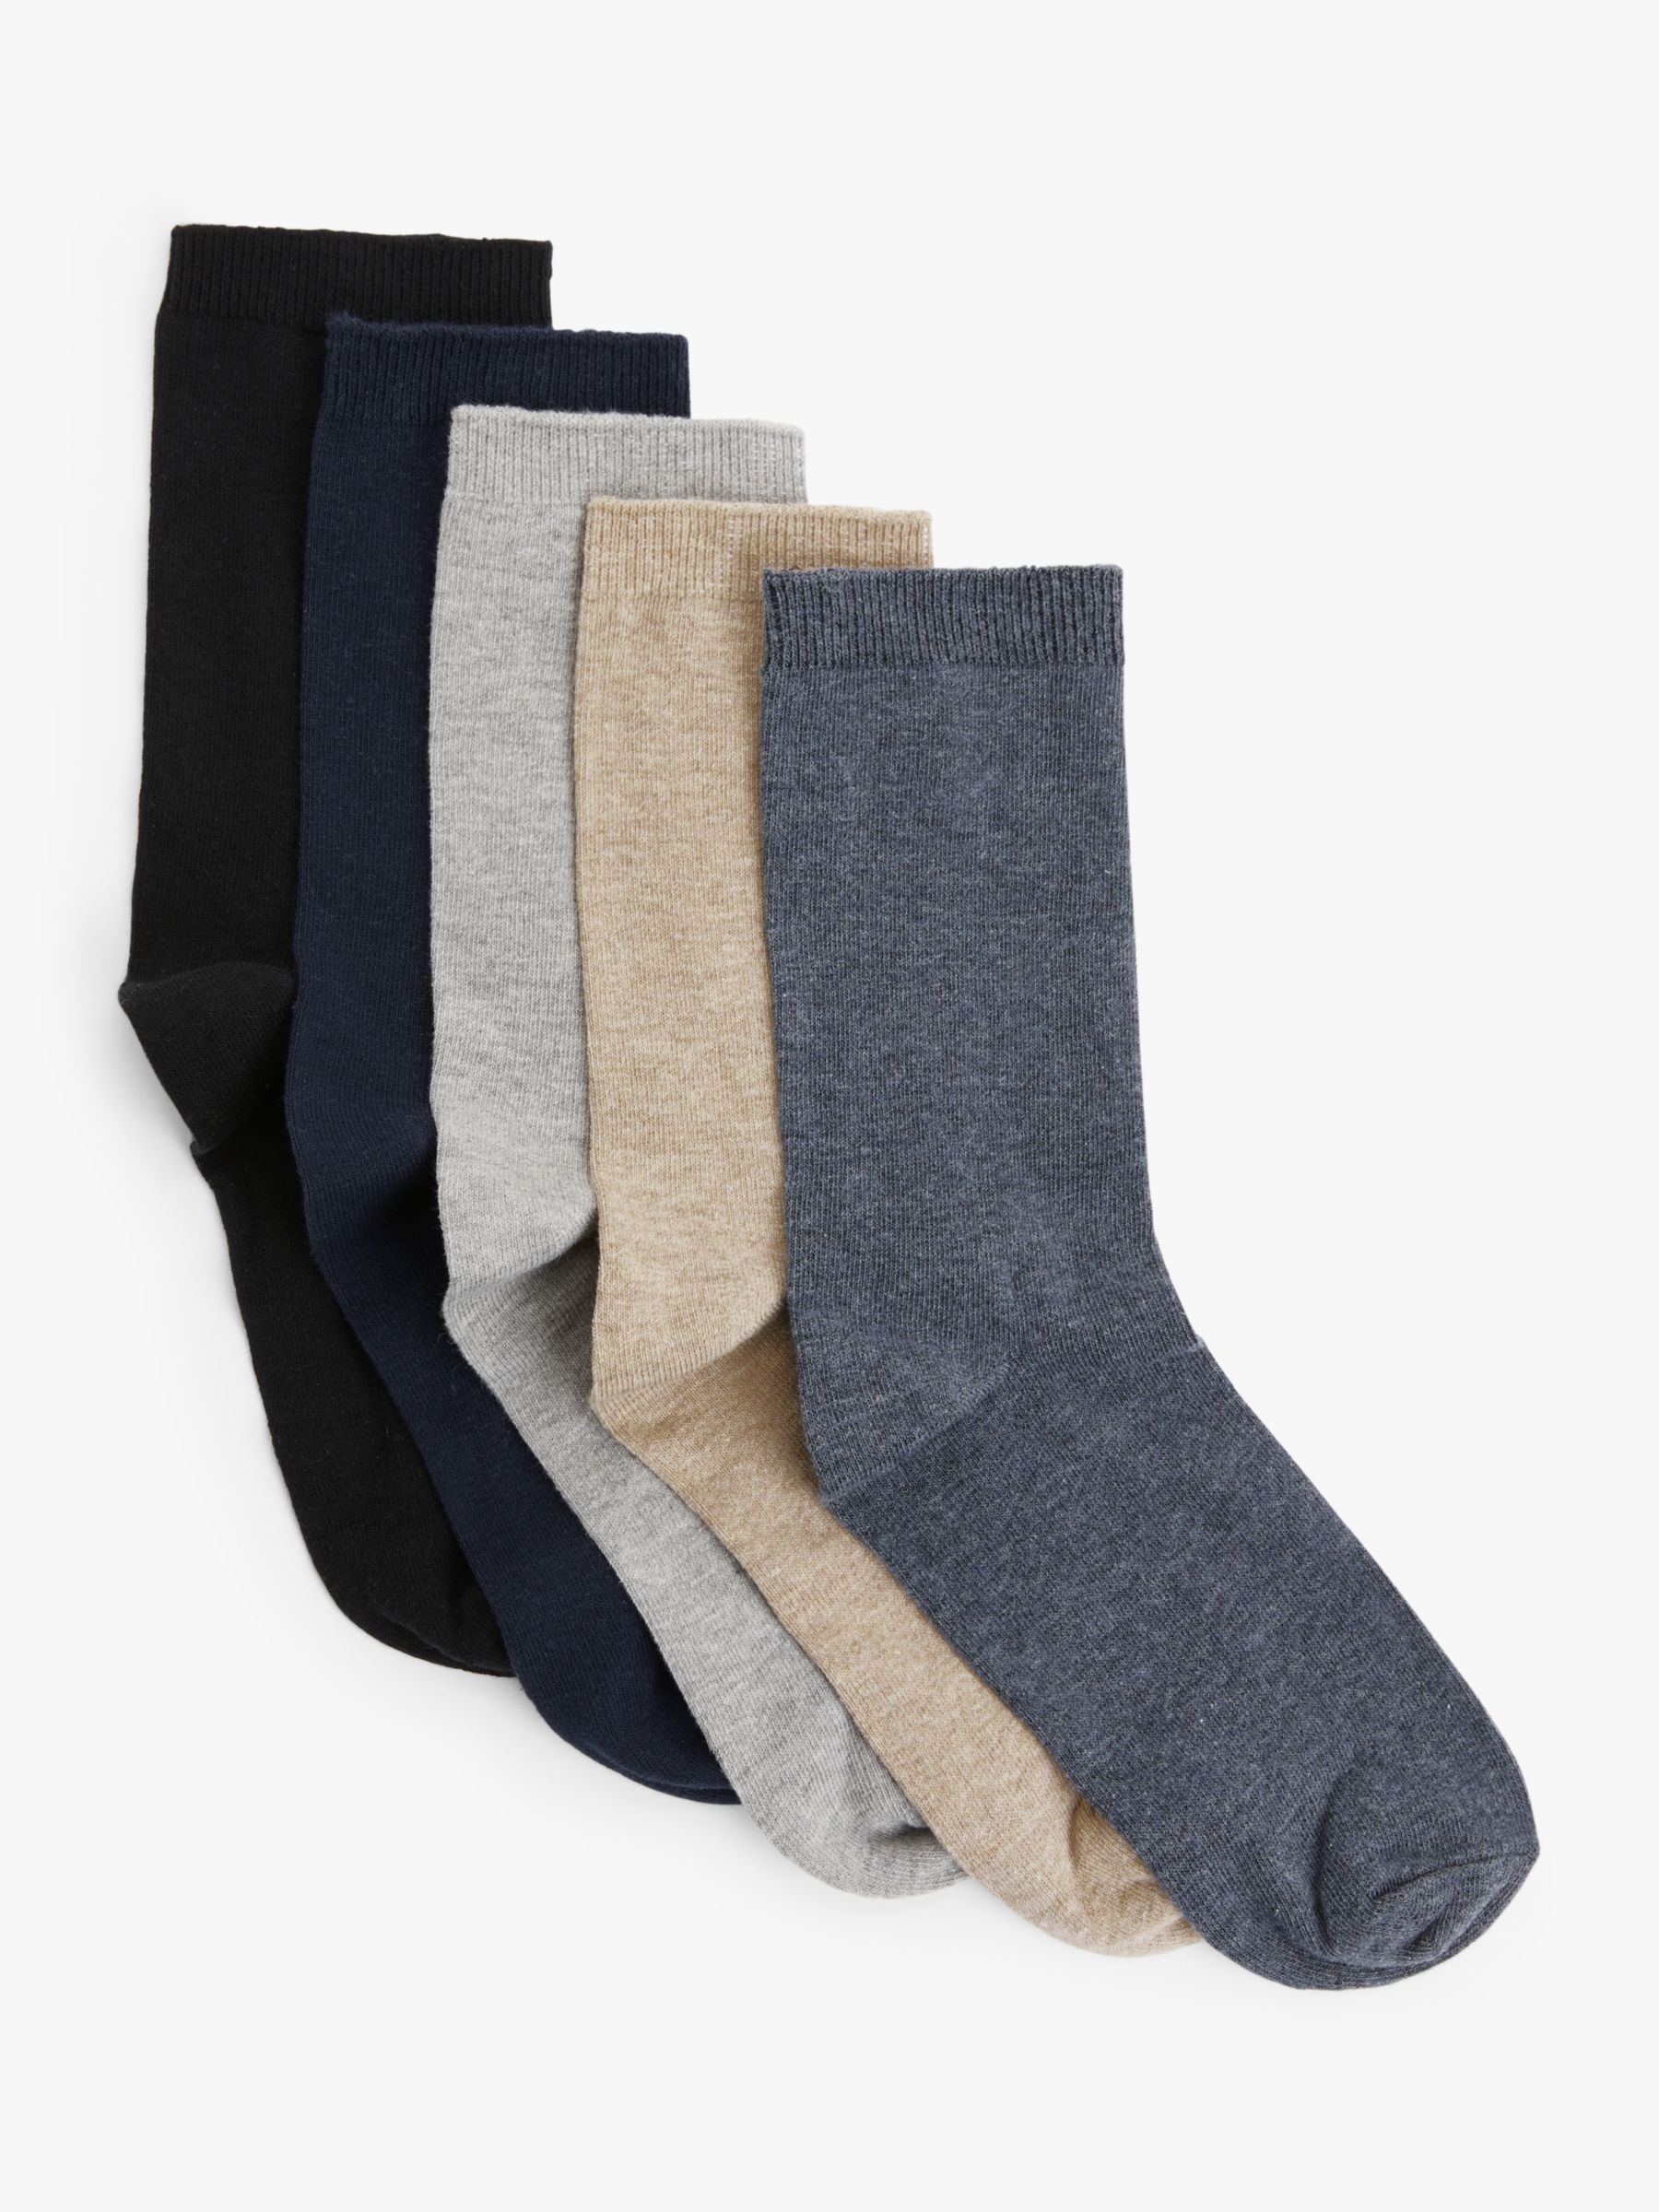 John Lewis & Partners Plain Organic Cotton Rich Ankle Socks, Pack of 5